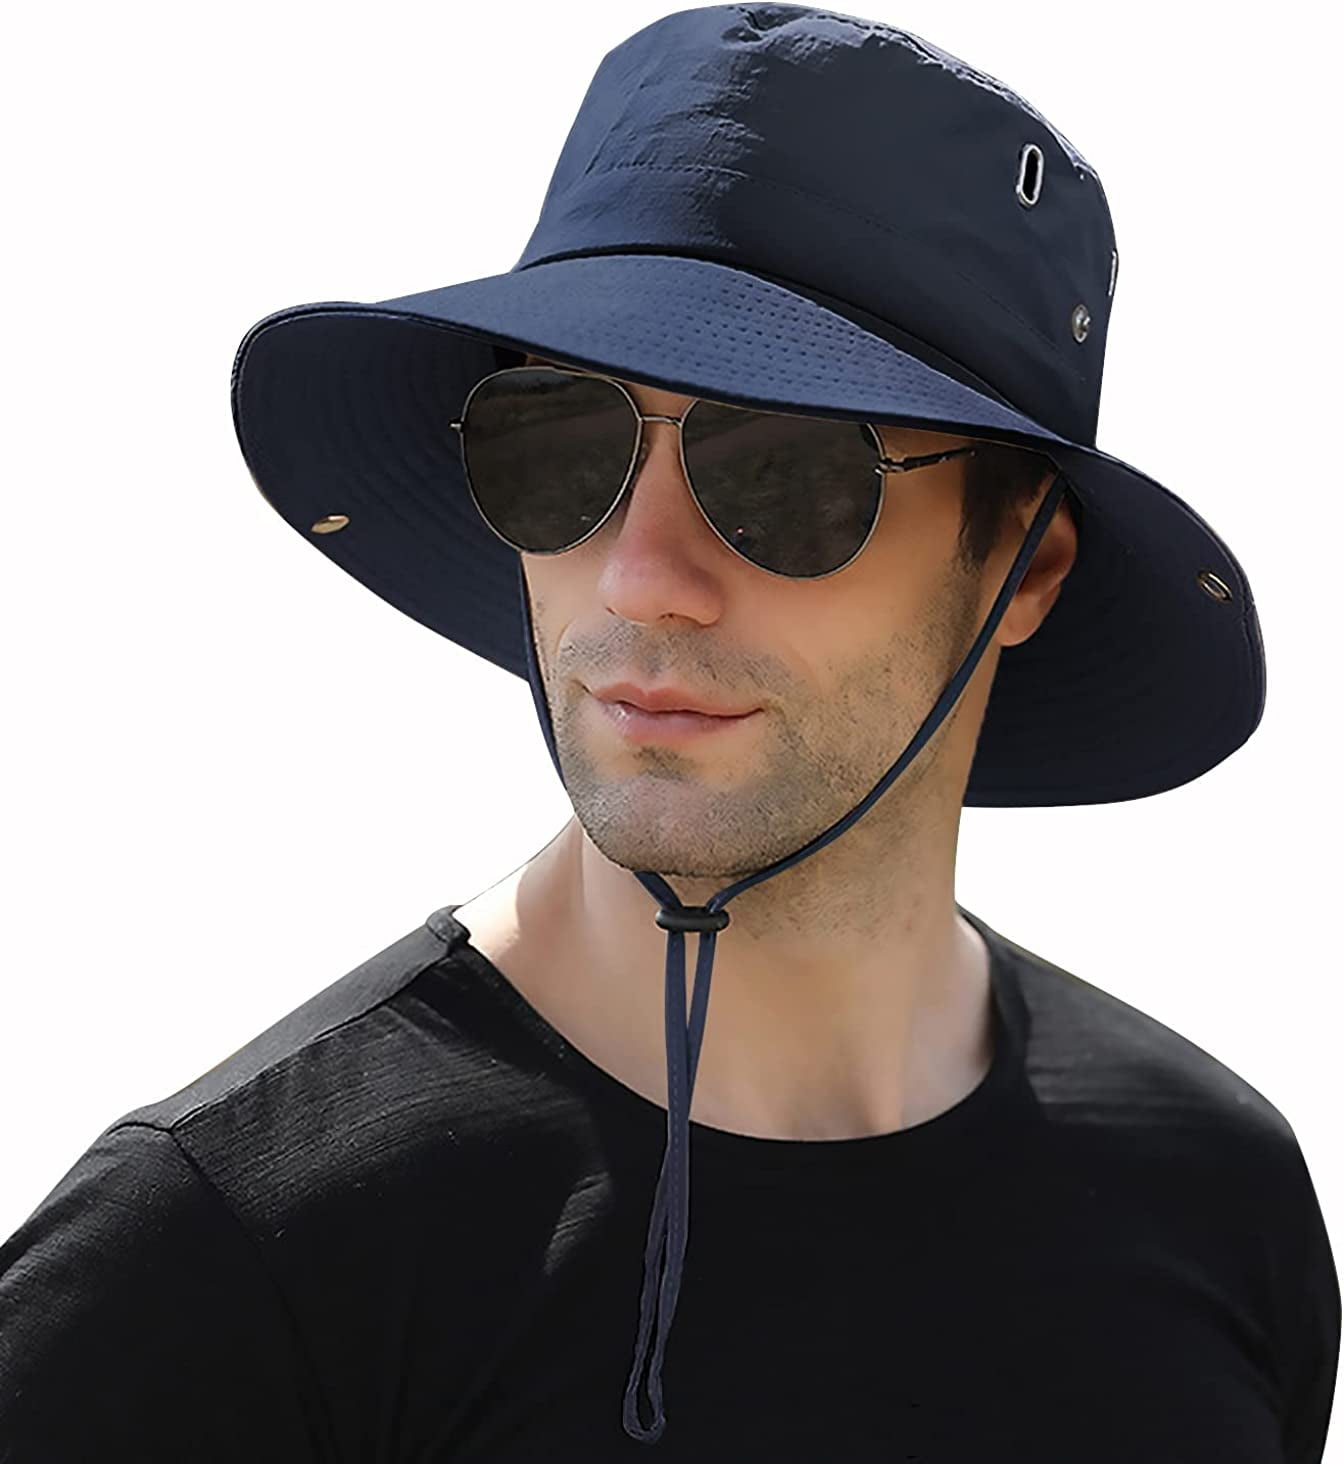 Dsia Zamur Wide Brim Fishing Sun Hat for Men Women, UPF 50+ Waterproof  Bucket Boonie Hat Hiking Camping Safari Garden Beach